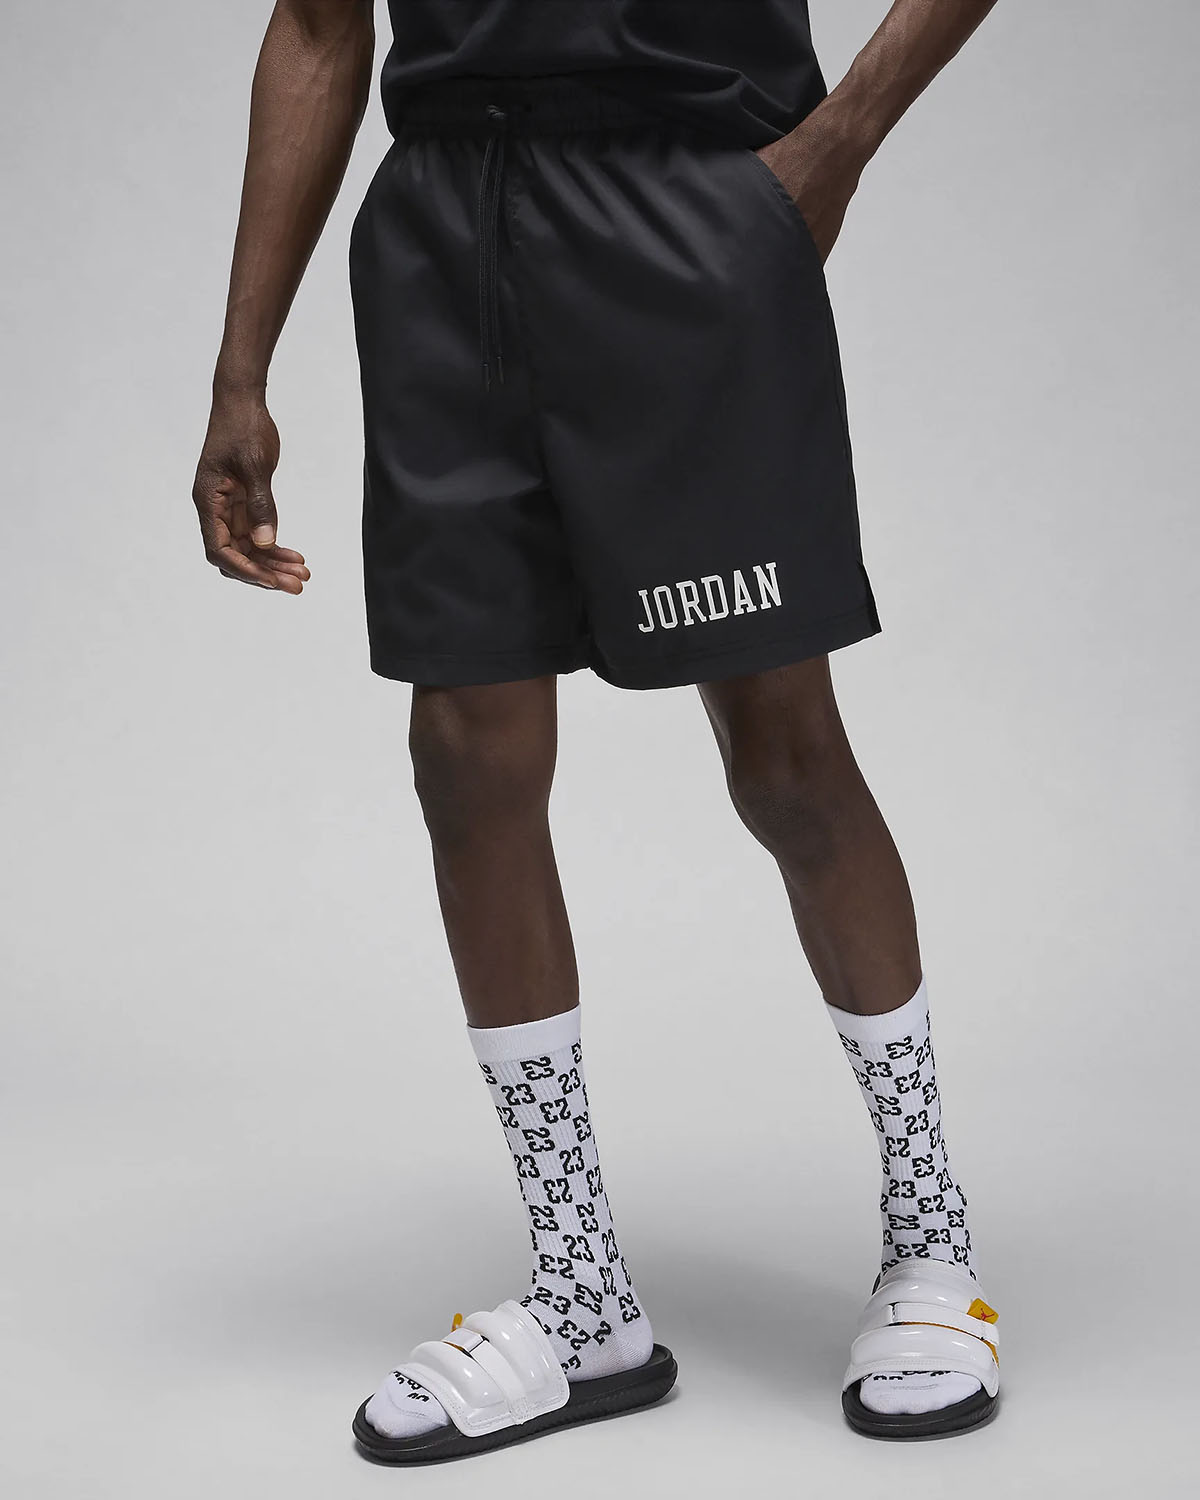 jordan Vnds Essentials Poolside Shorts Black White 1